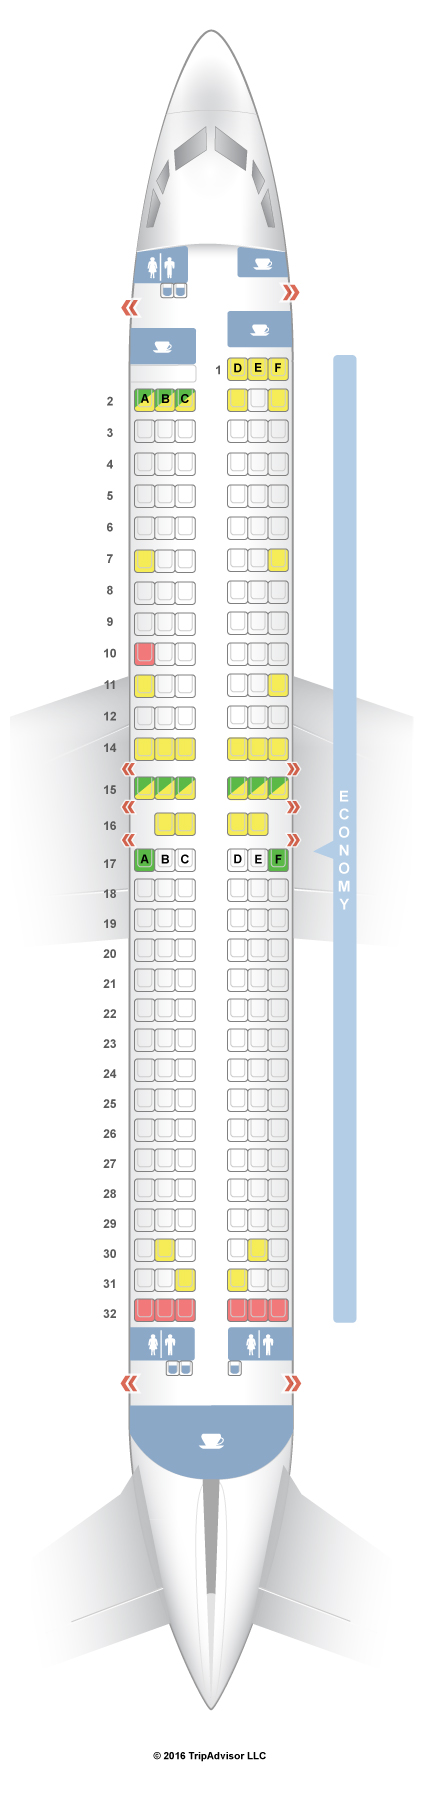 Sunwing 737 800 Seating Chart